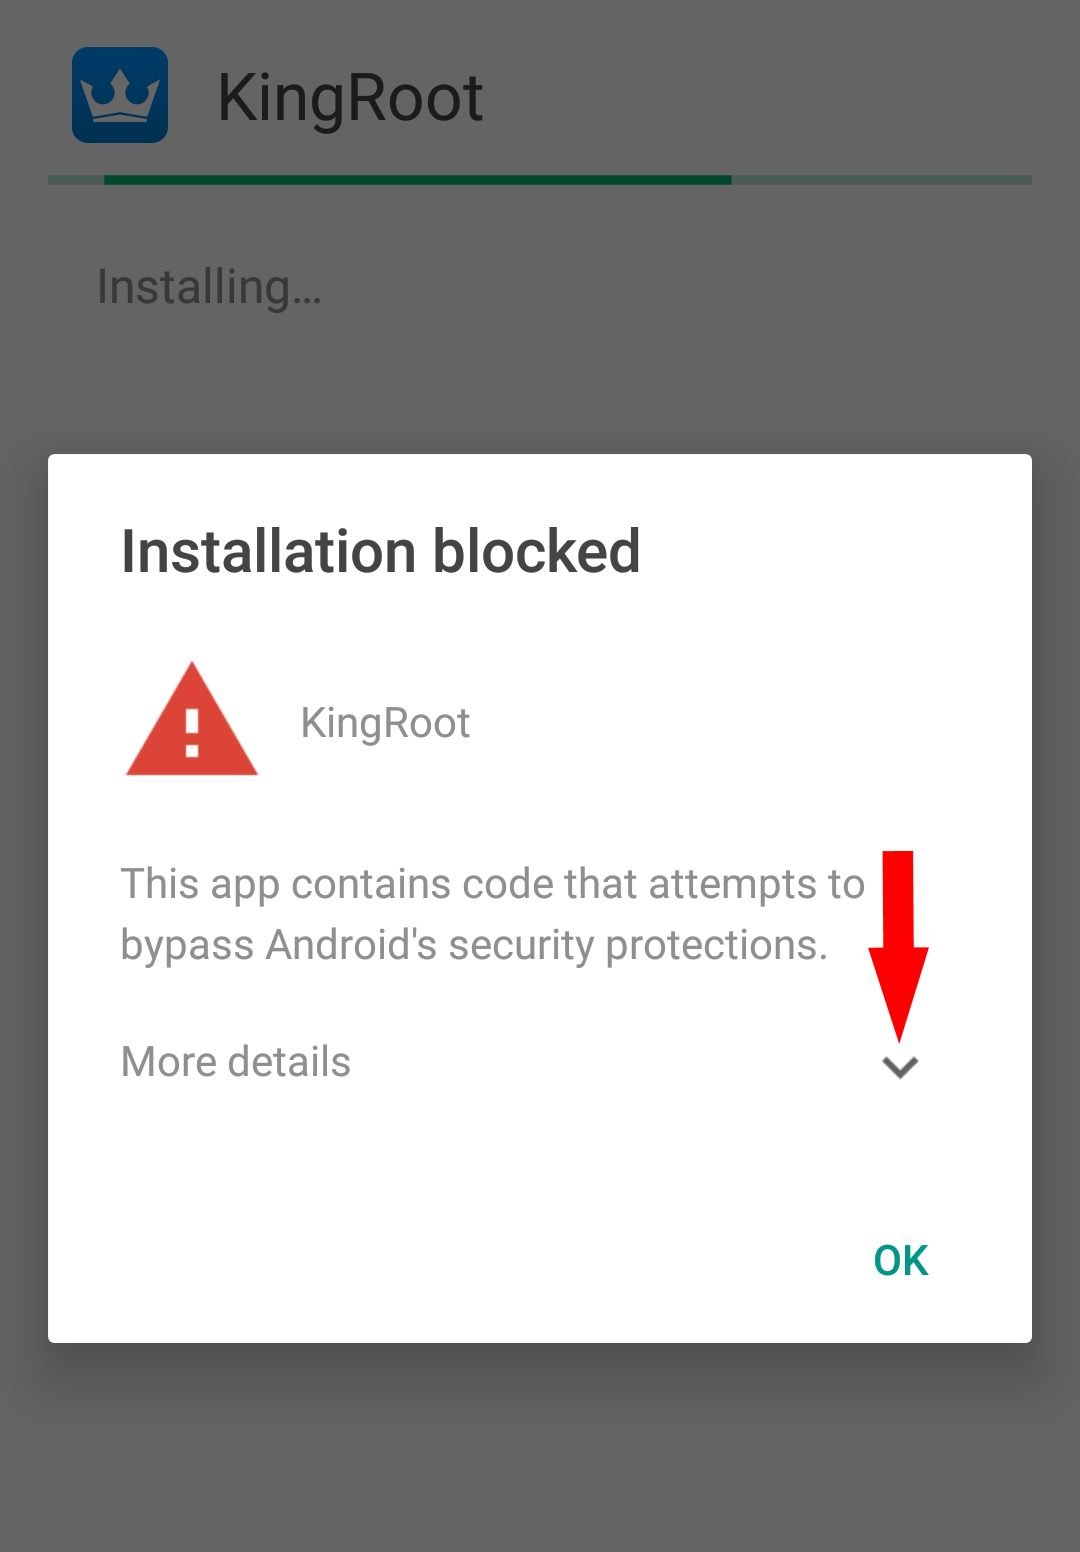  more details option on installing kingroot